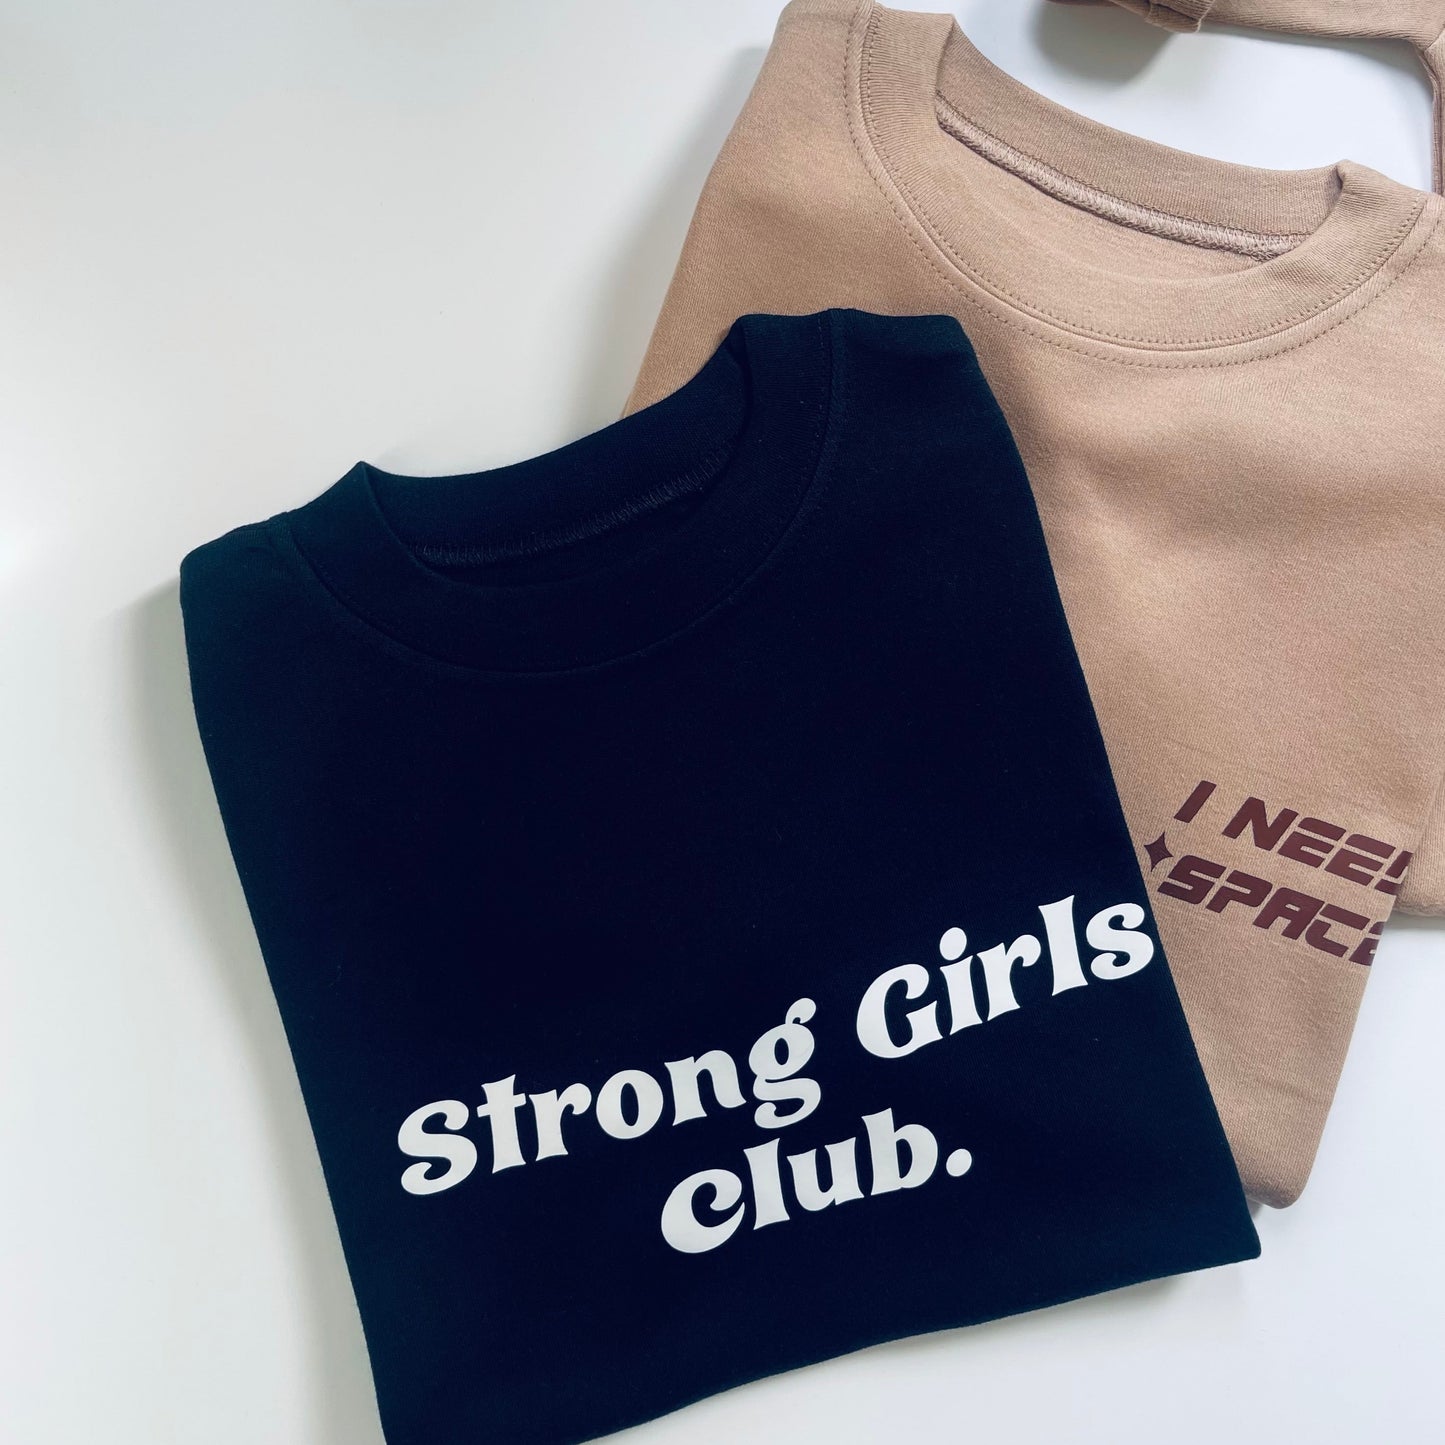 Strong girls club